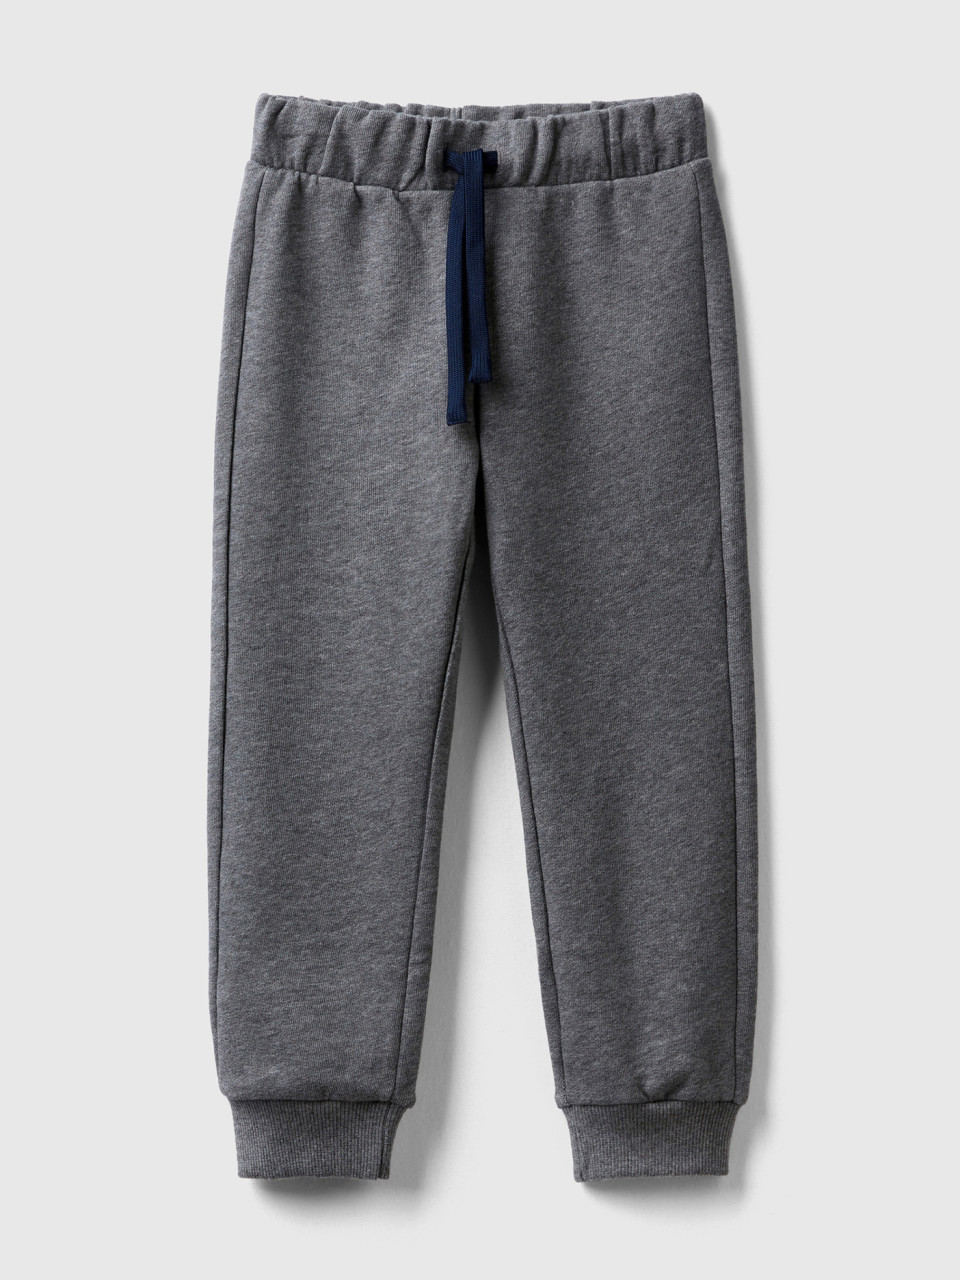 Benetton, Sweatpants With Pocket, Dark Gray, Kids